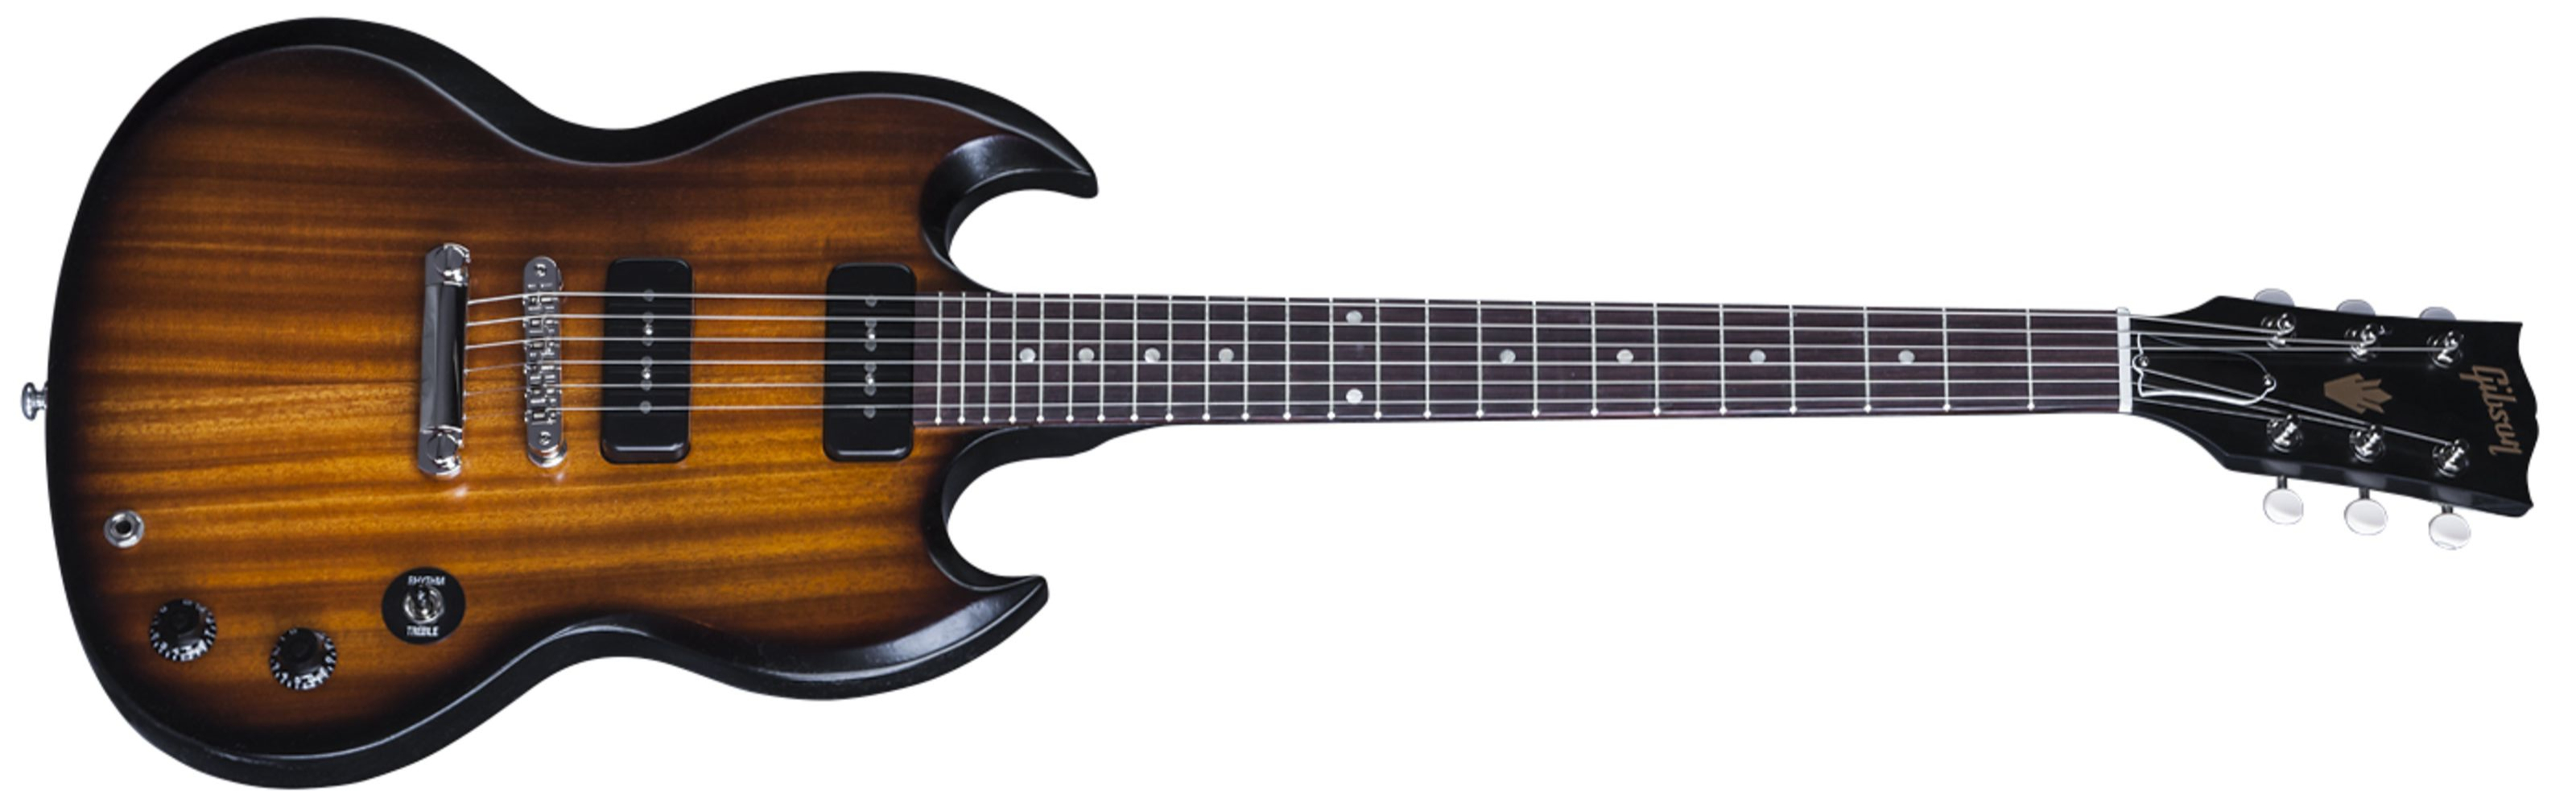 Gibson-SG-Special-Single-Coil-2016-Satin-Vintage-Sunburst-Front.jpg